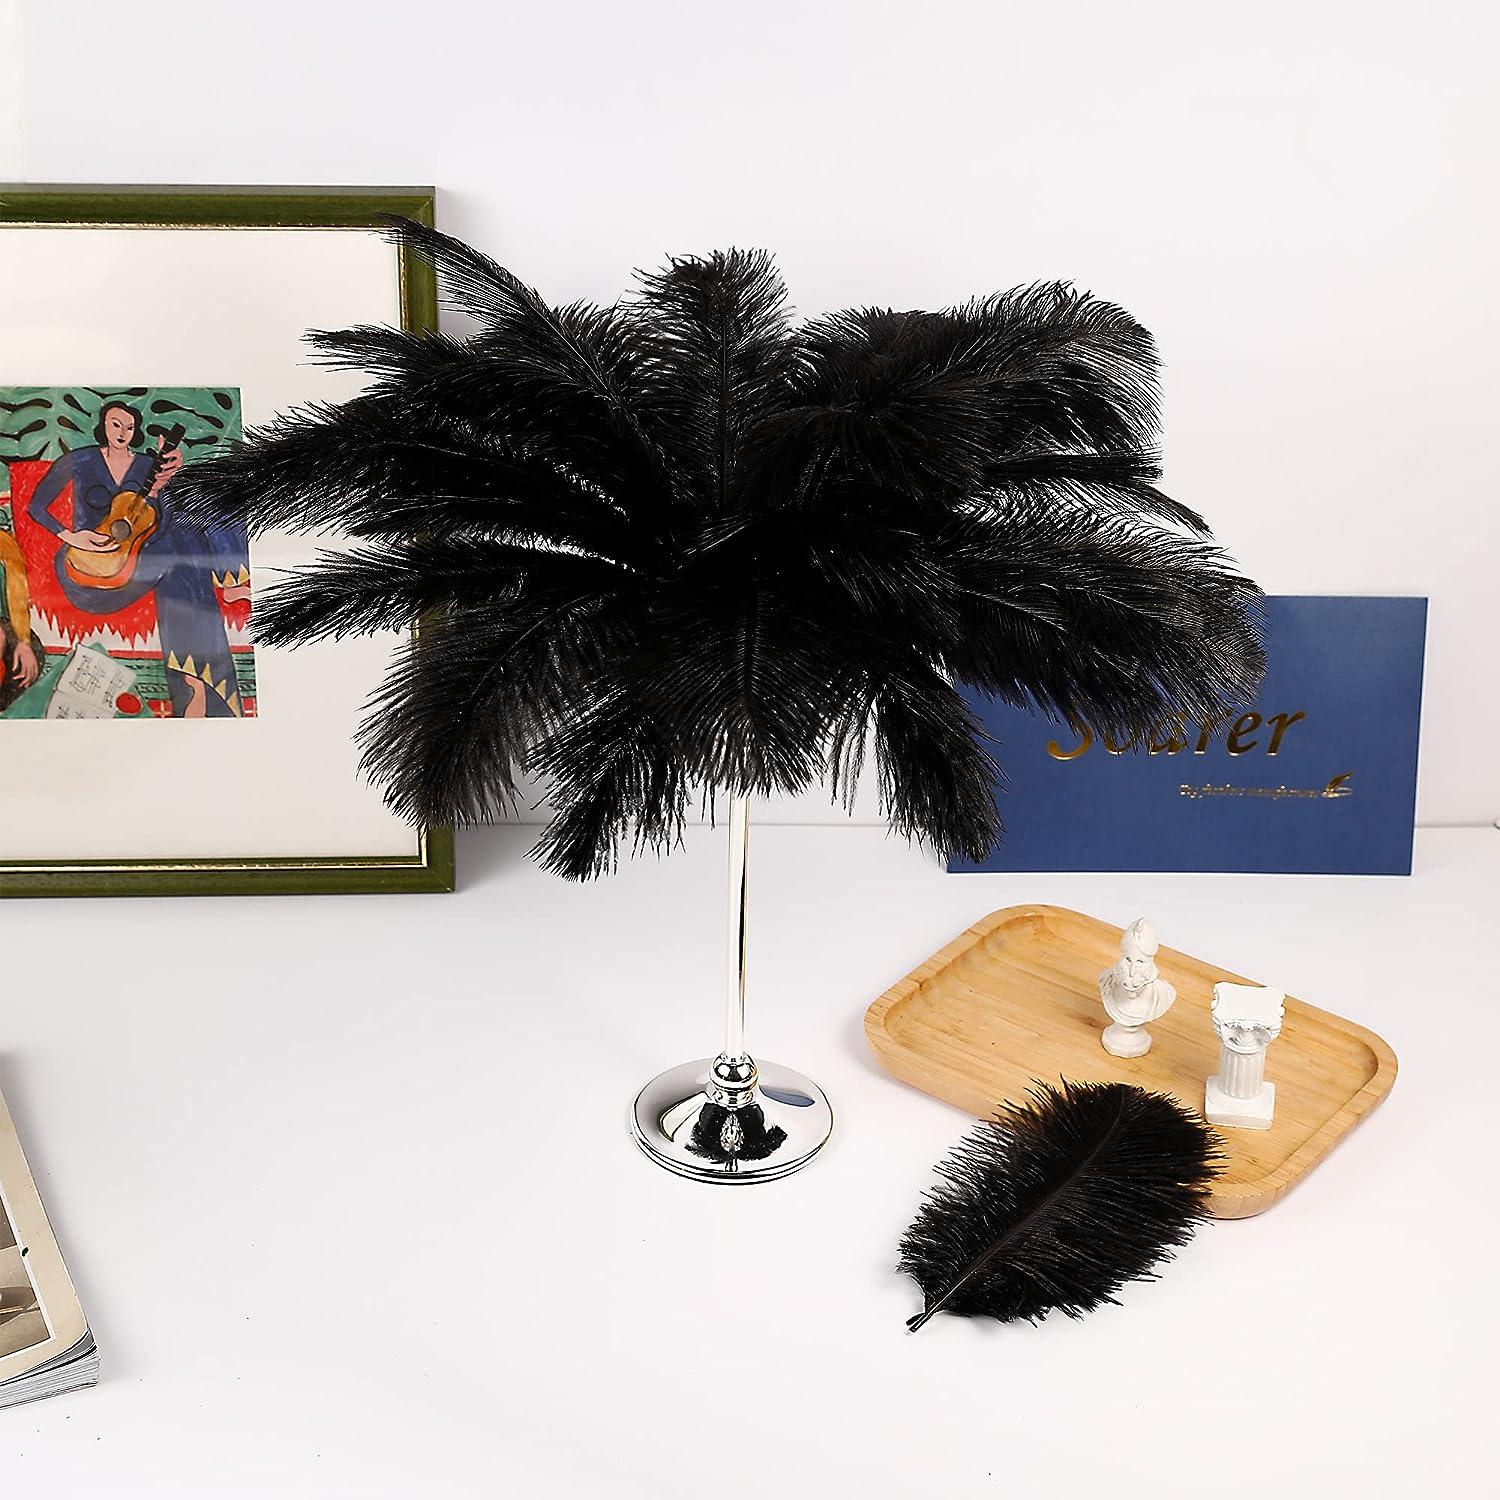 Black Ostrich Feathers/Plumes Wholesale 16-18 inch 50 Pieces Dozen Bulk  Wedding Centerpieces Crafts, arts DIY Stage and events decoration Discount  Cheap